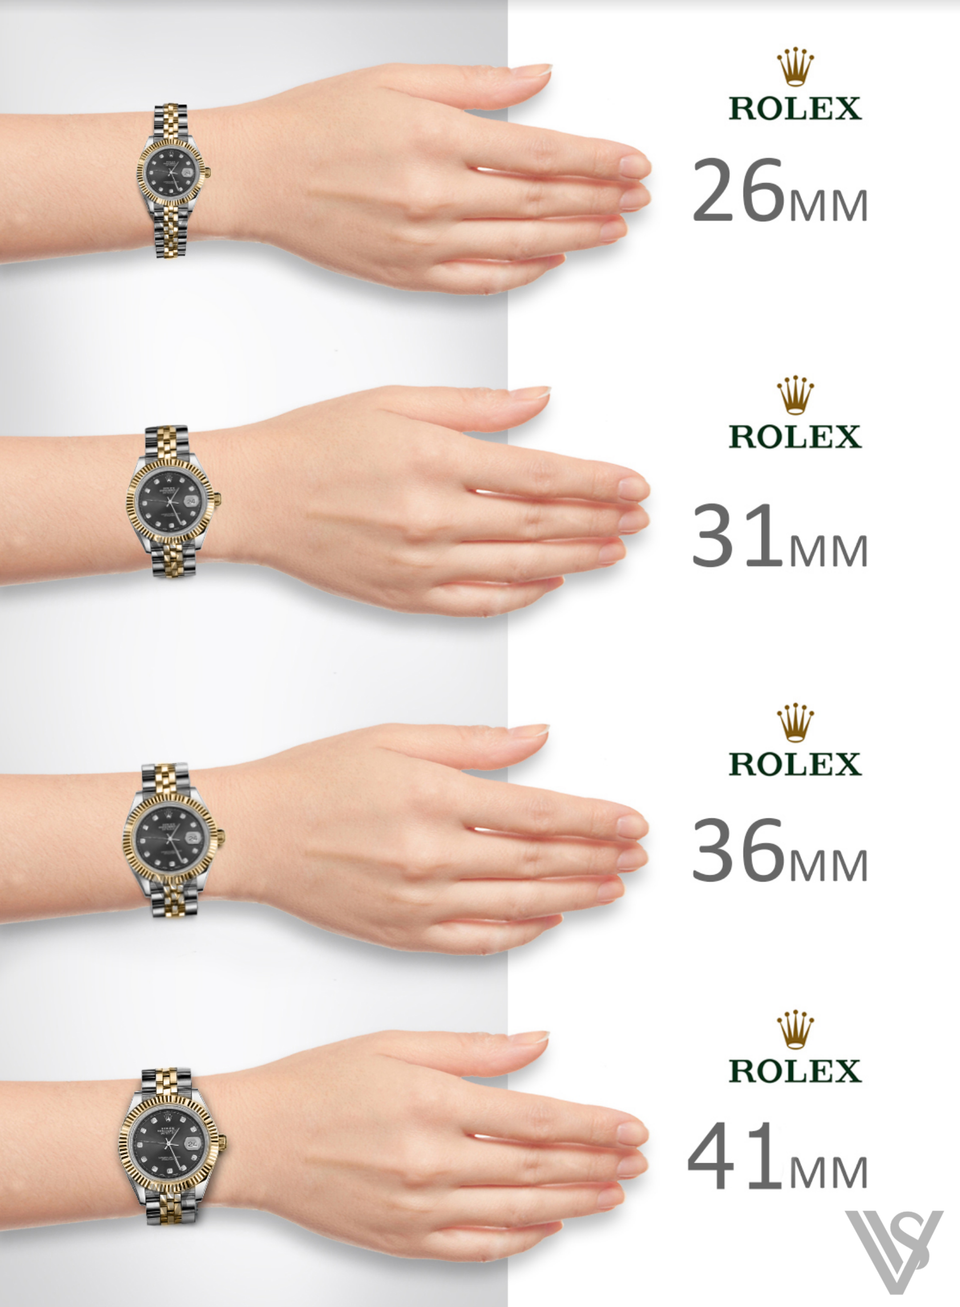 Rolex - Datejust - 41mm Blue Stick Index 18K White Gold Fluted Bezel Stainless Steel Oyster Bracelet Men's Watch